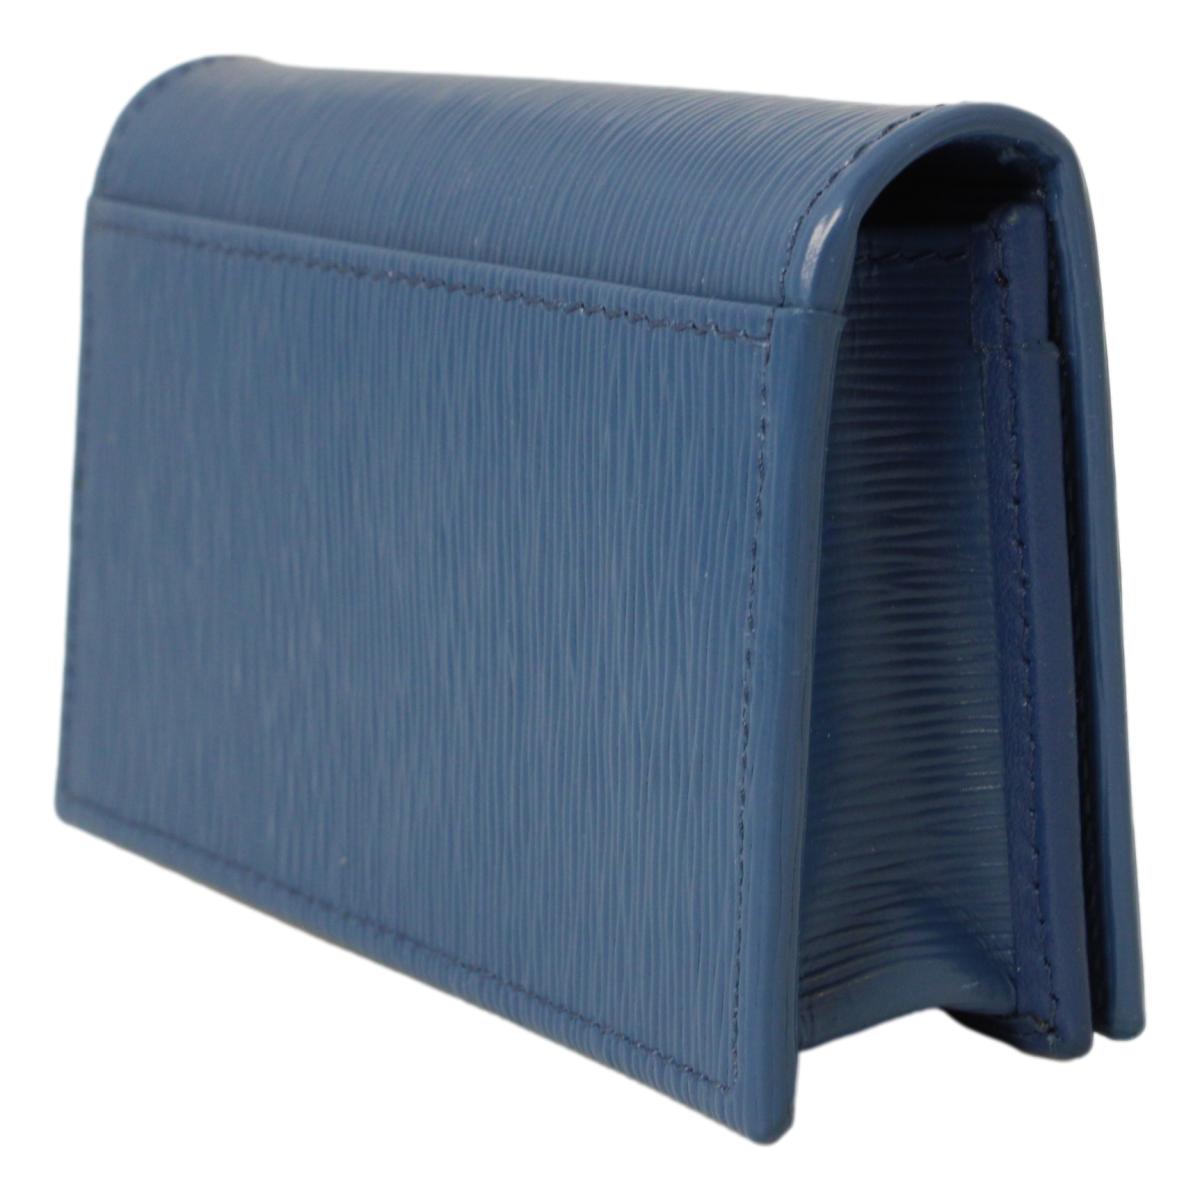 Prada Blue Vitello Move Leather Triangle Logo Card Case Wallet 1MC122 - LUXURYMRKT